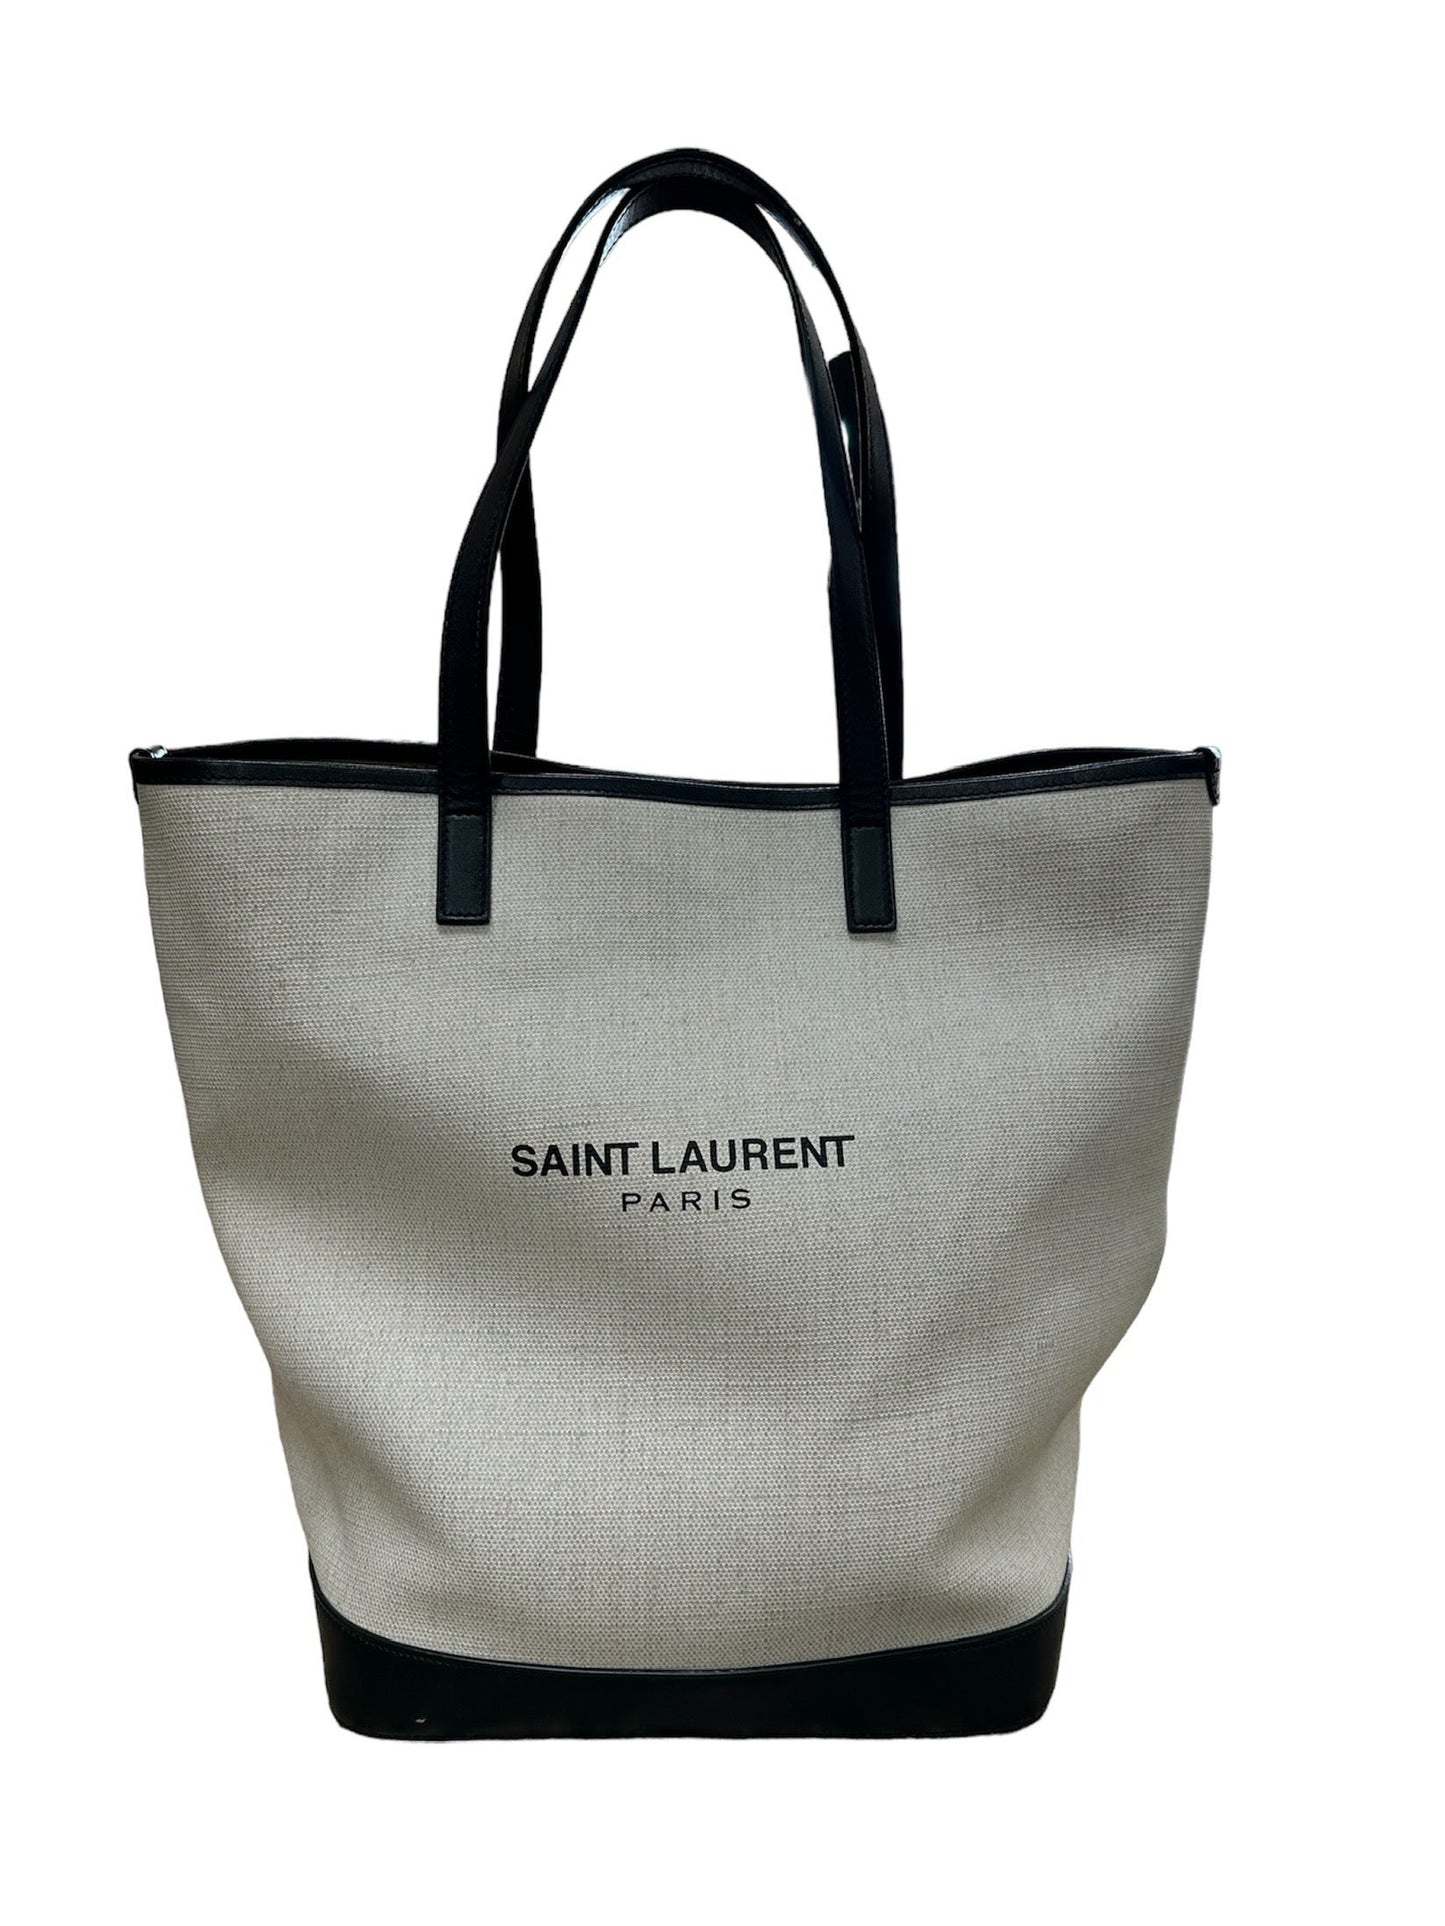 Handbag Yves Saint Laurent, Size Large